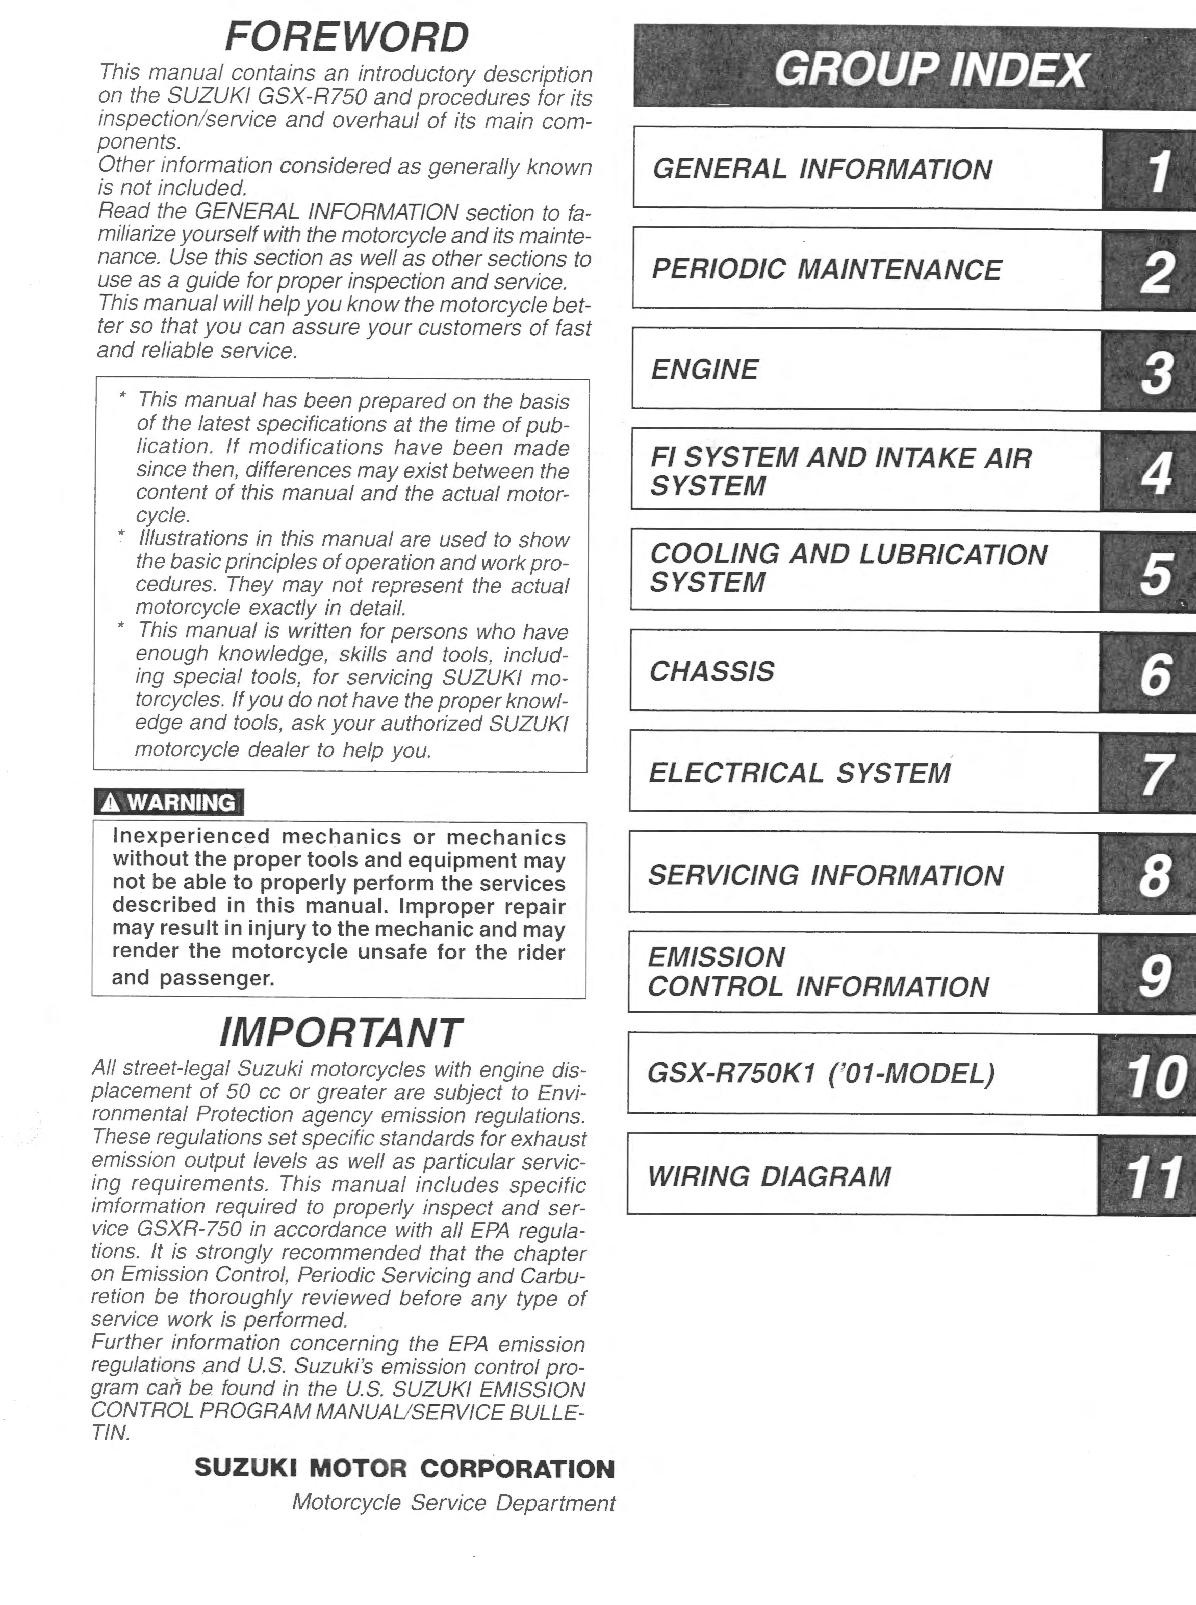 File:Suzuki GSX-R750 2000-2002 Service Manual.pdf